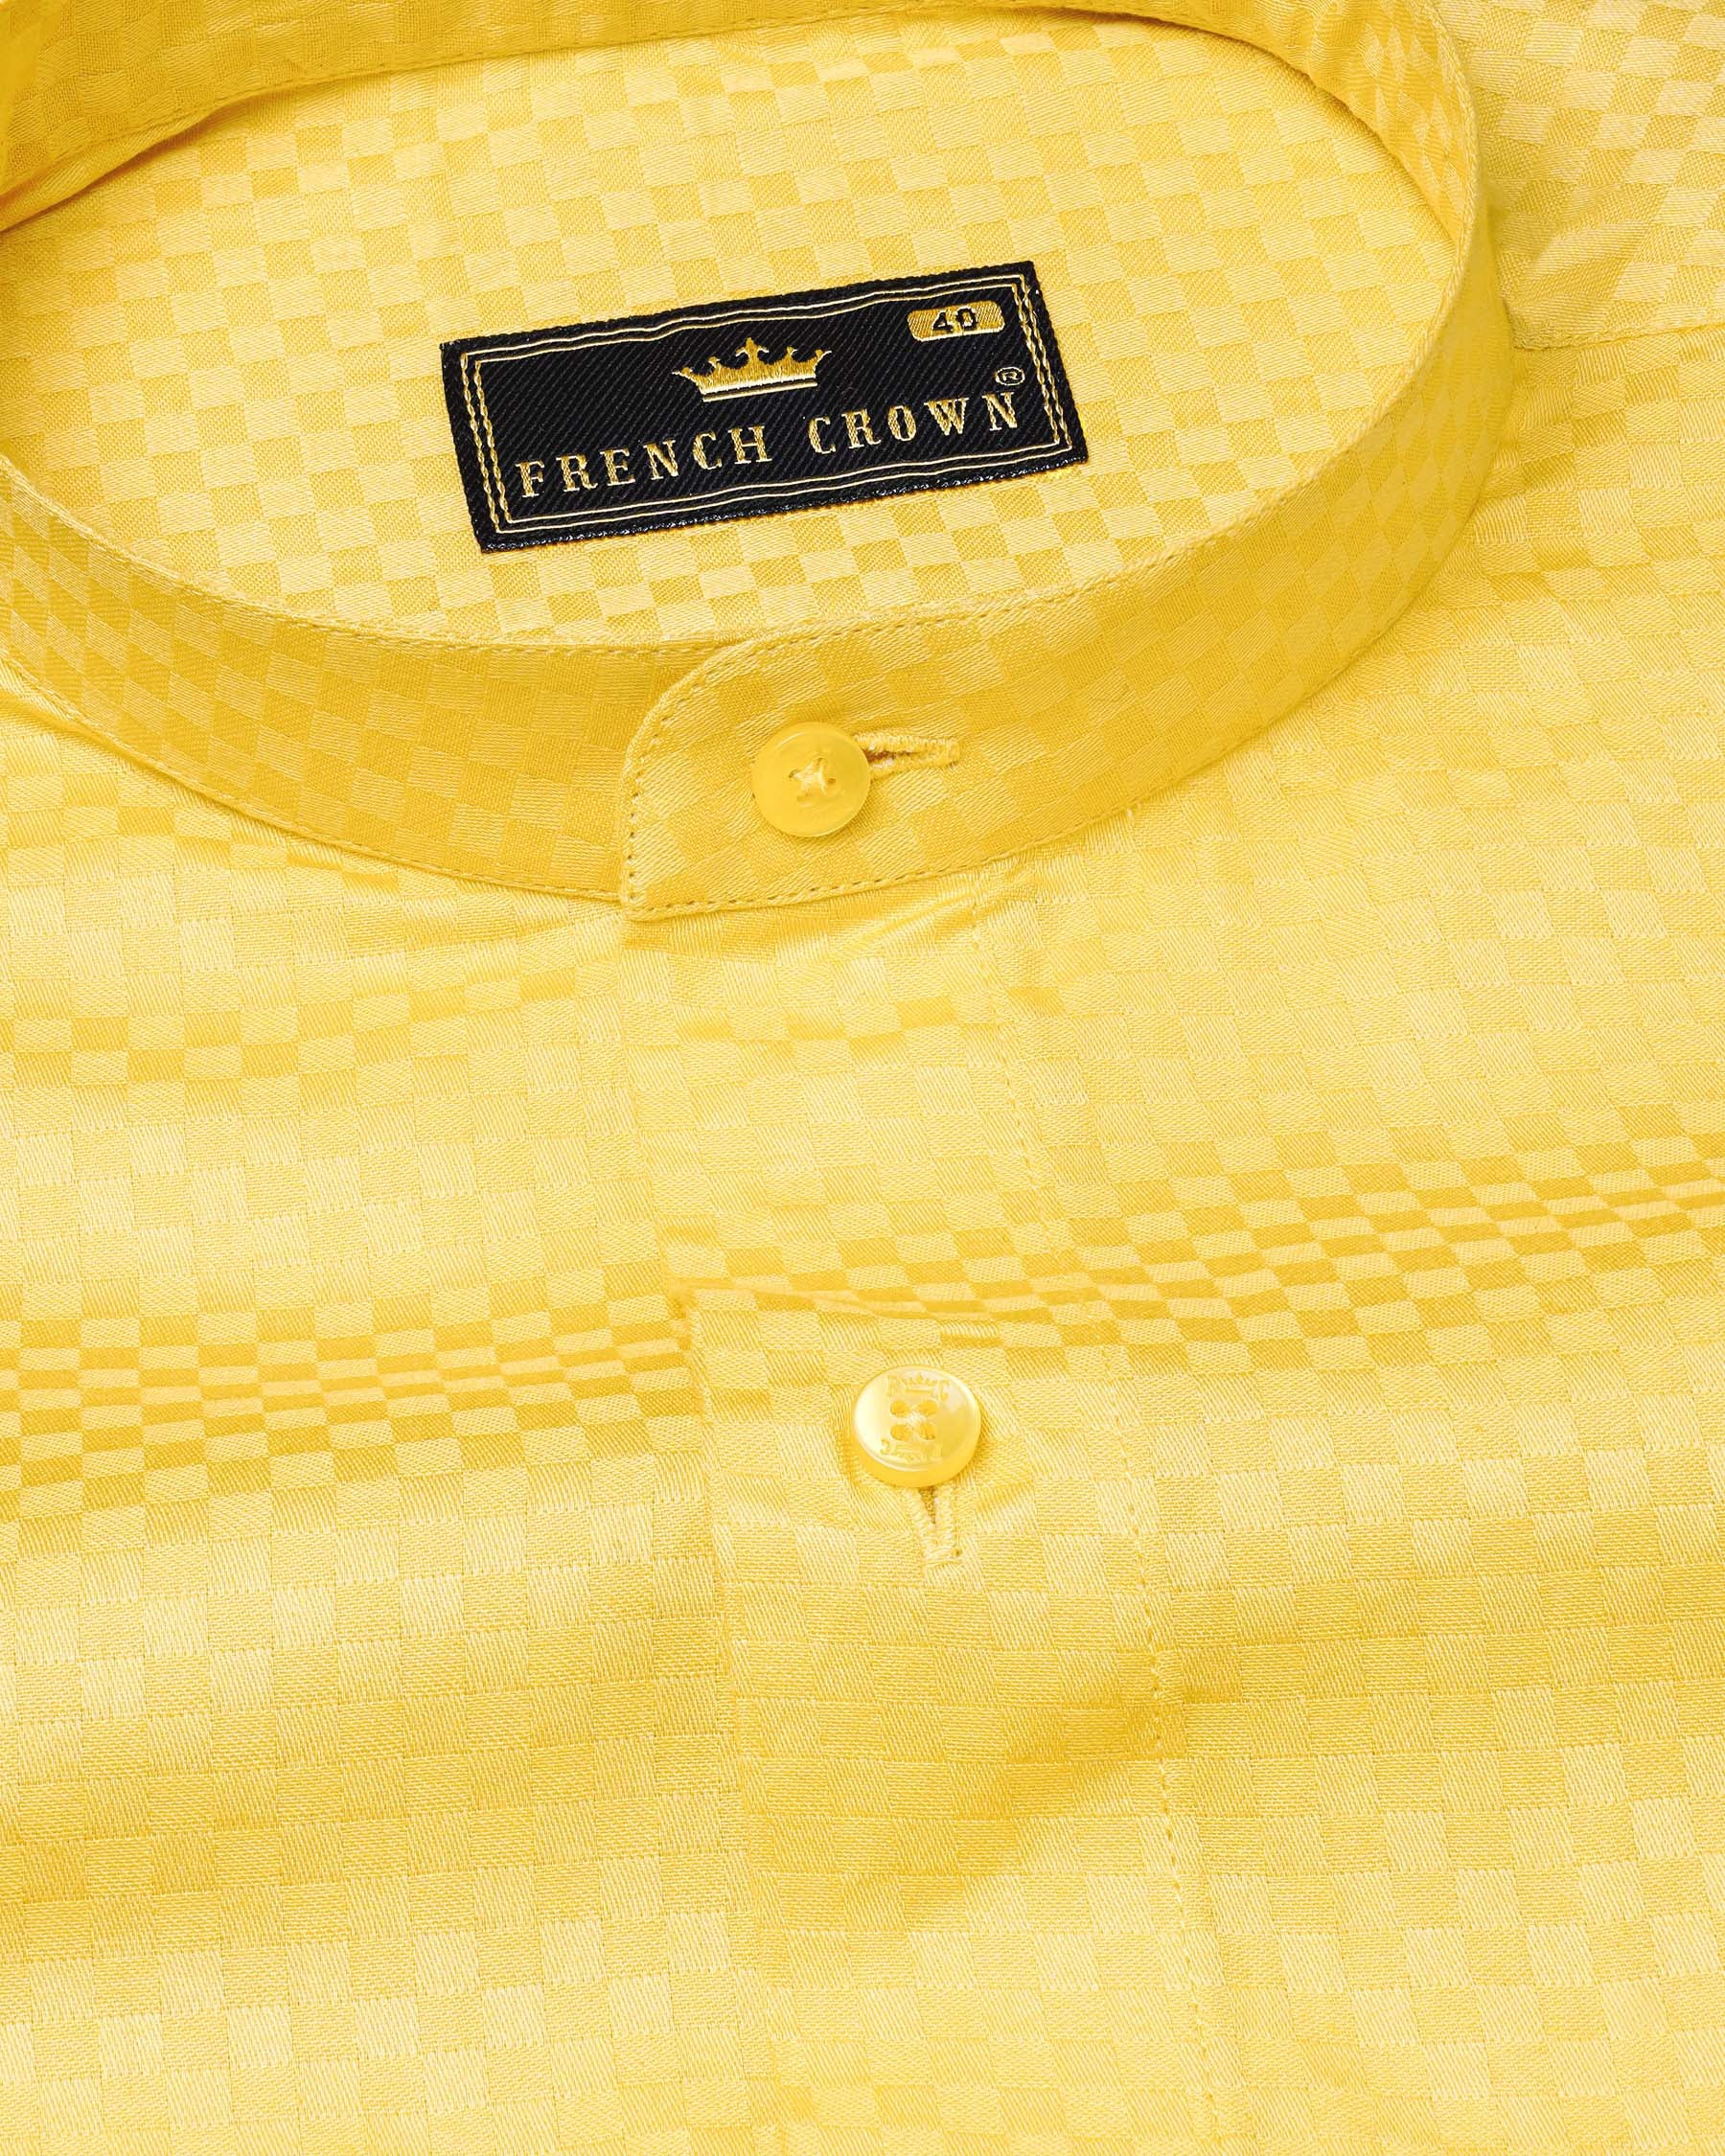 Arylide Yellow Checked Dobby Textured Premium Giza Cotton Shirt 7735-M-YL-38,7735-M-YL-38,7735-M-YL-39,7735-M-YL-39,7735-M-YL-40,7735-M-YL-40,7735-M-YL-42,7735-M-YL-42,7735-M-YL-44,7735-M-YL-44,7735-M-YL-46,7735-M-YL-46,7735-M-YL-48,7735-M-YL-48,7735-M-YL-50,7735-M-YL-50,7735-M-YL-52,7735-M-YL-52